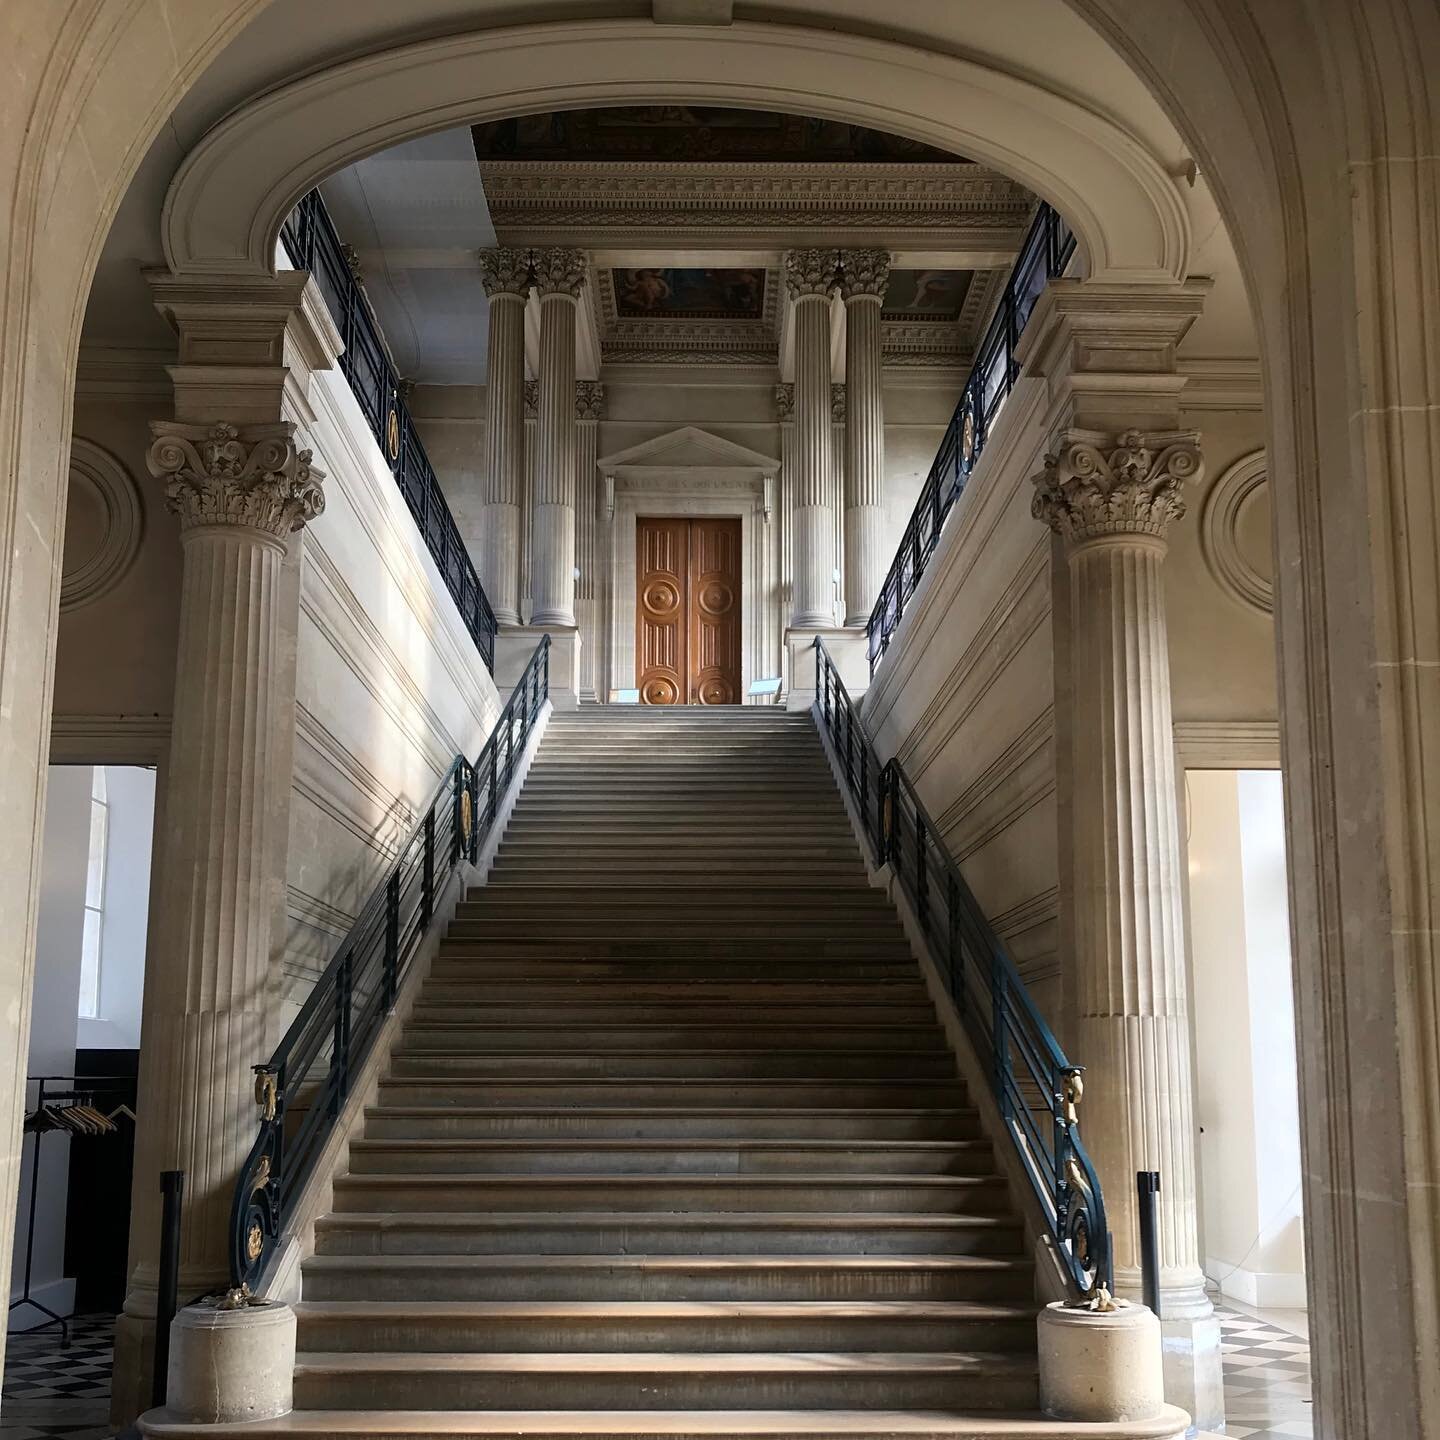 Archives-Nationales-Escalier-Parisology1.jpg